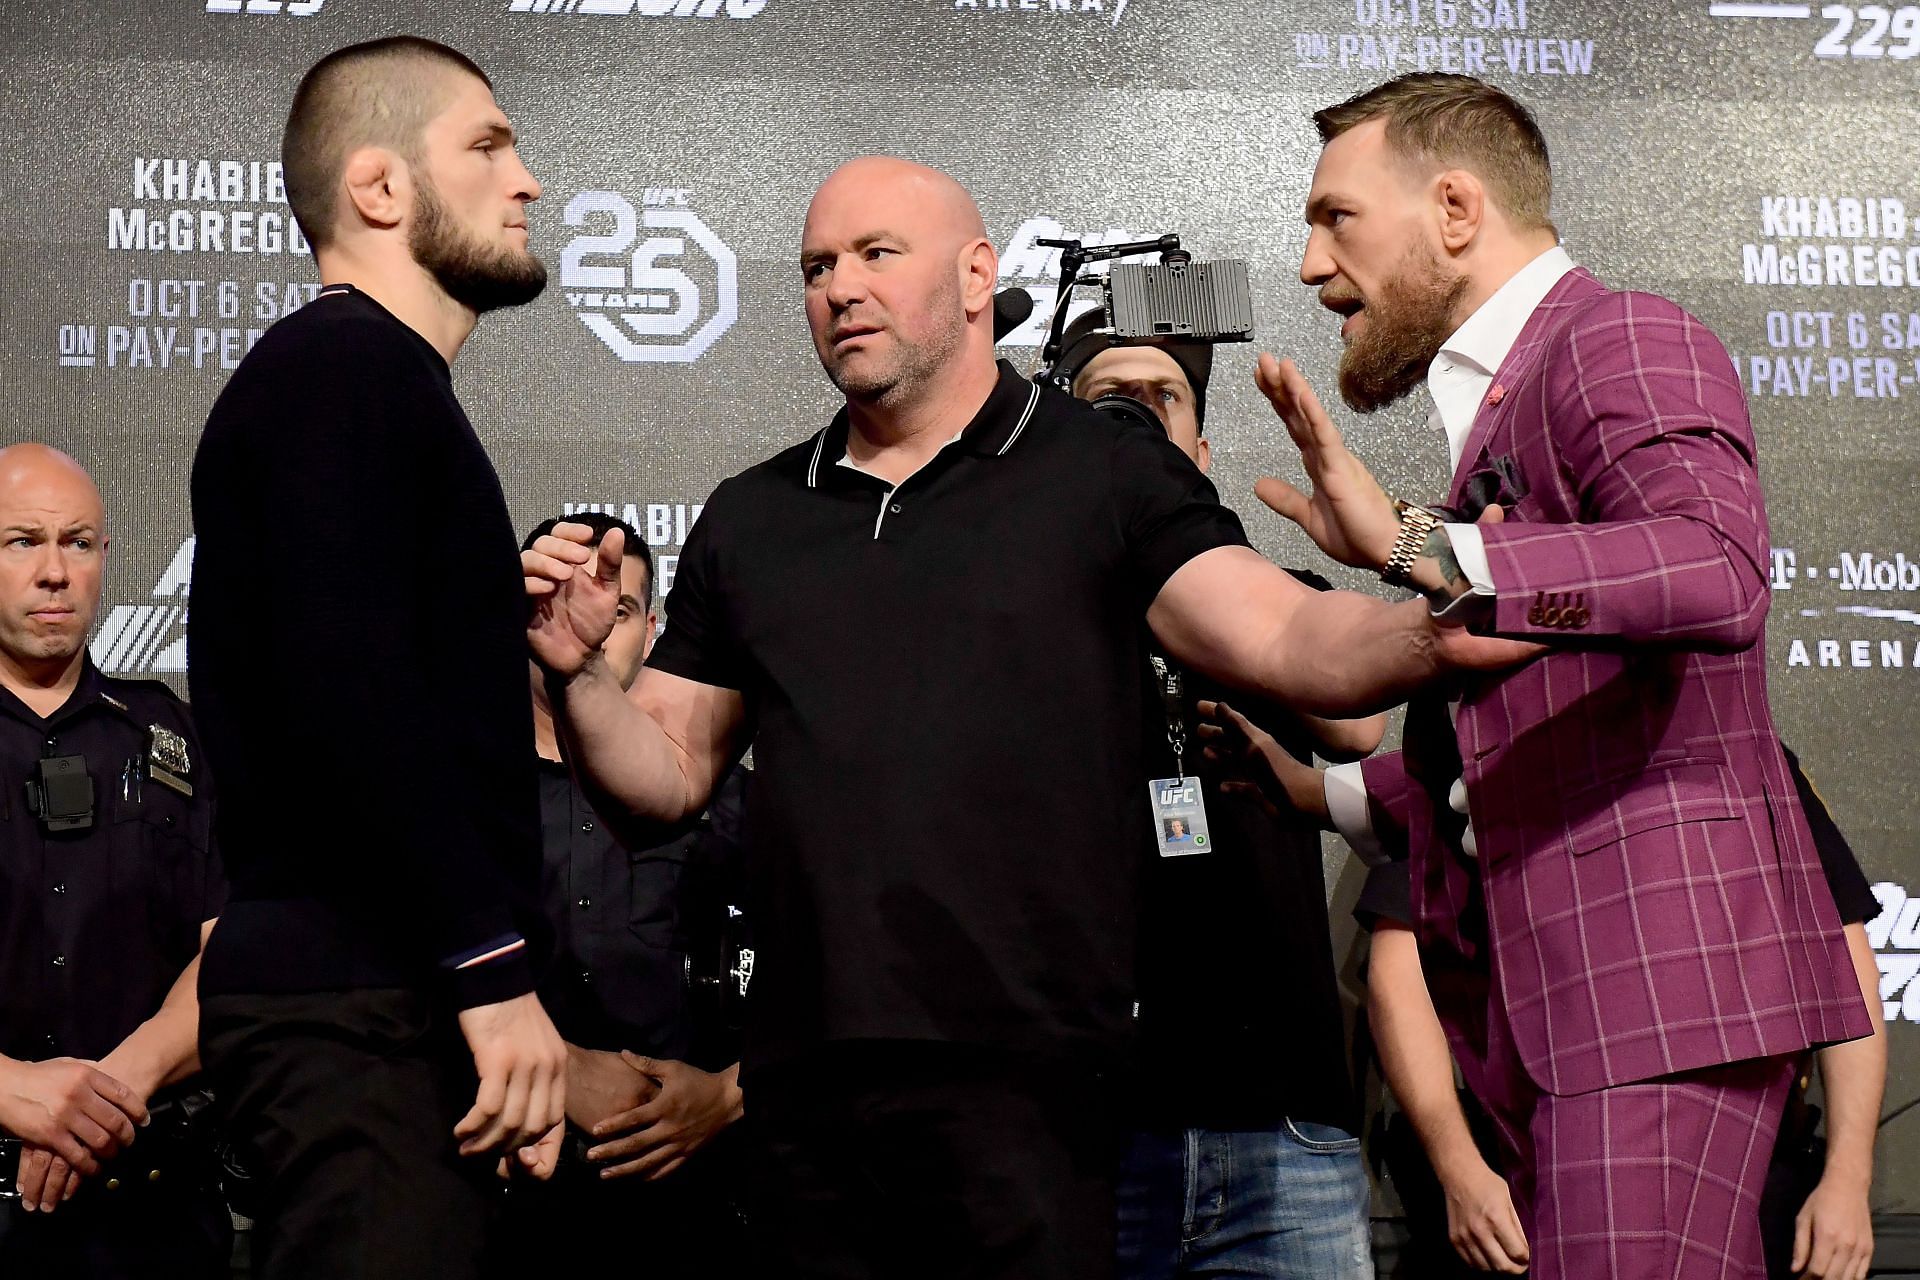 UFC 229: Khabib v McGregor Press Conference: Khabib Nurmagomedov and Conor McGregor (Image courtesy of Getty)